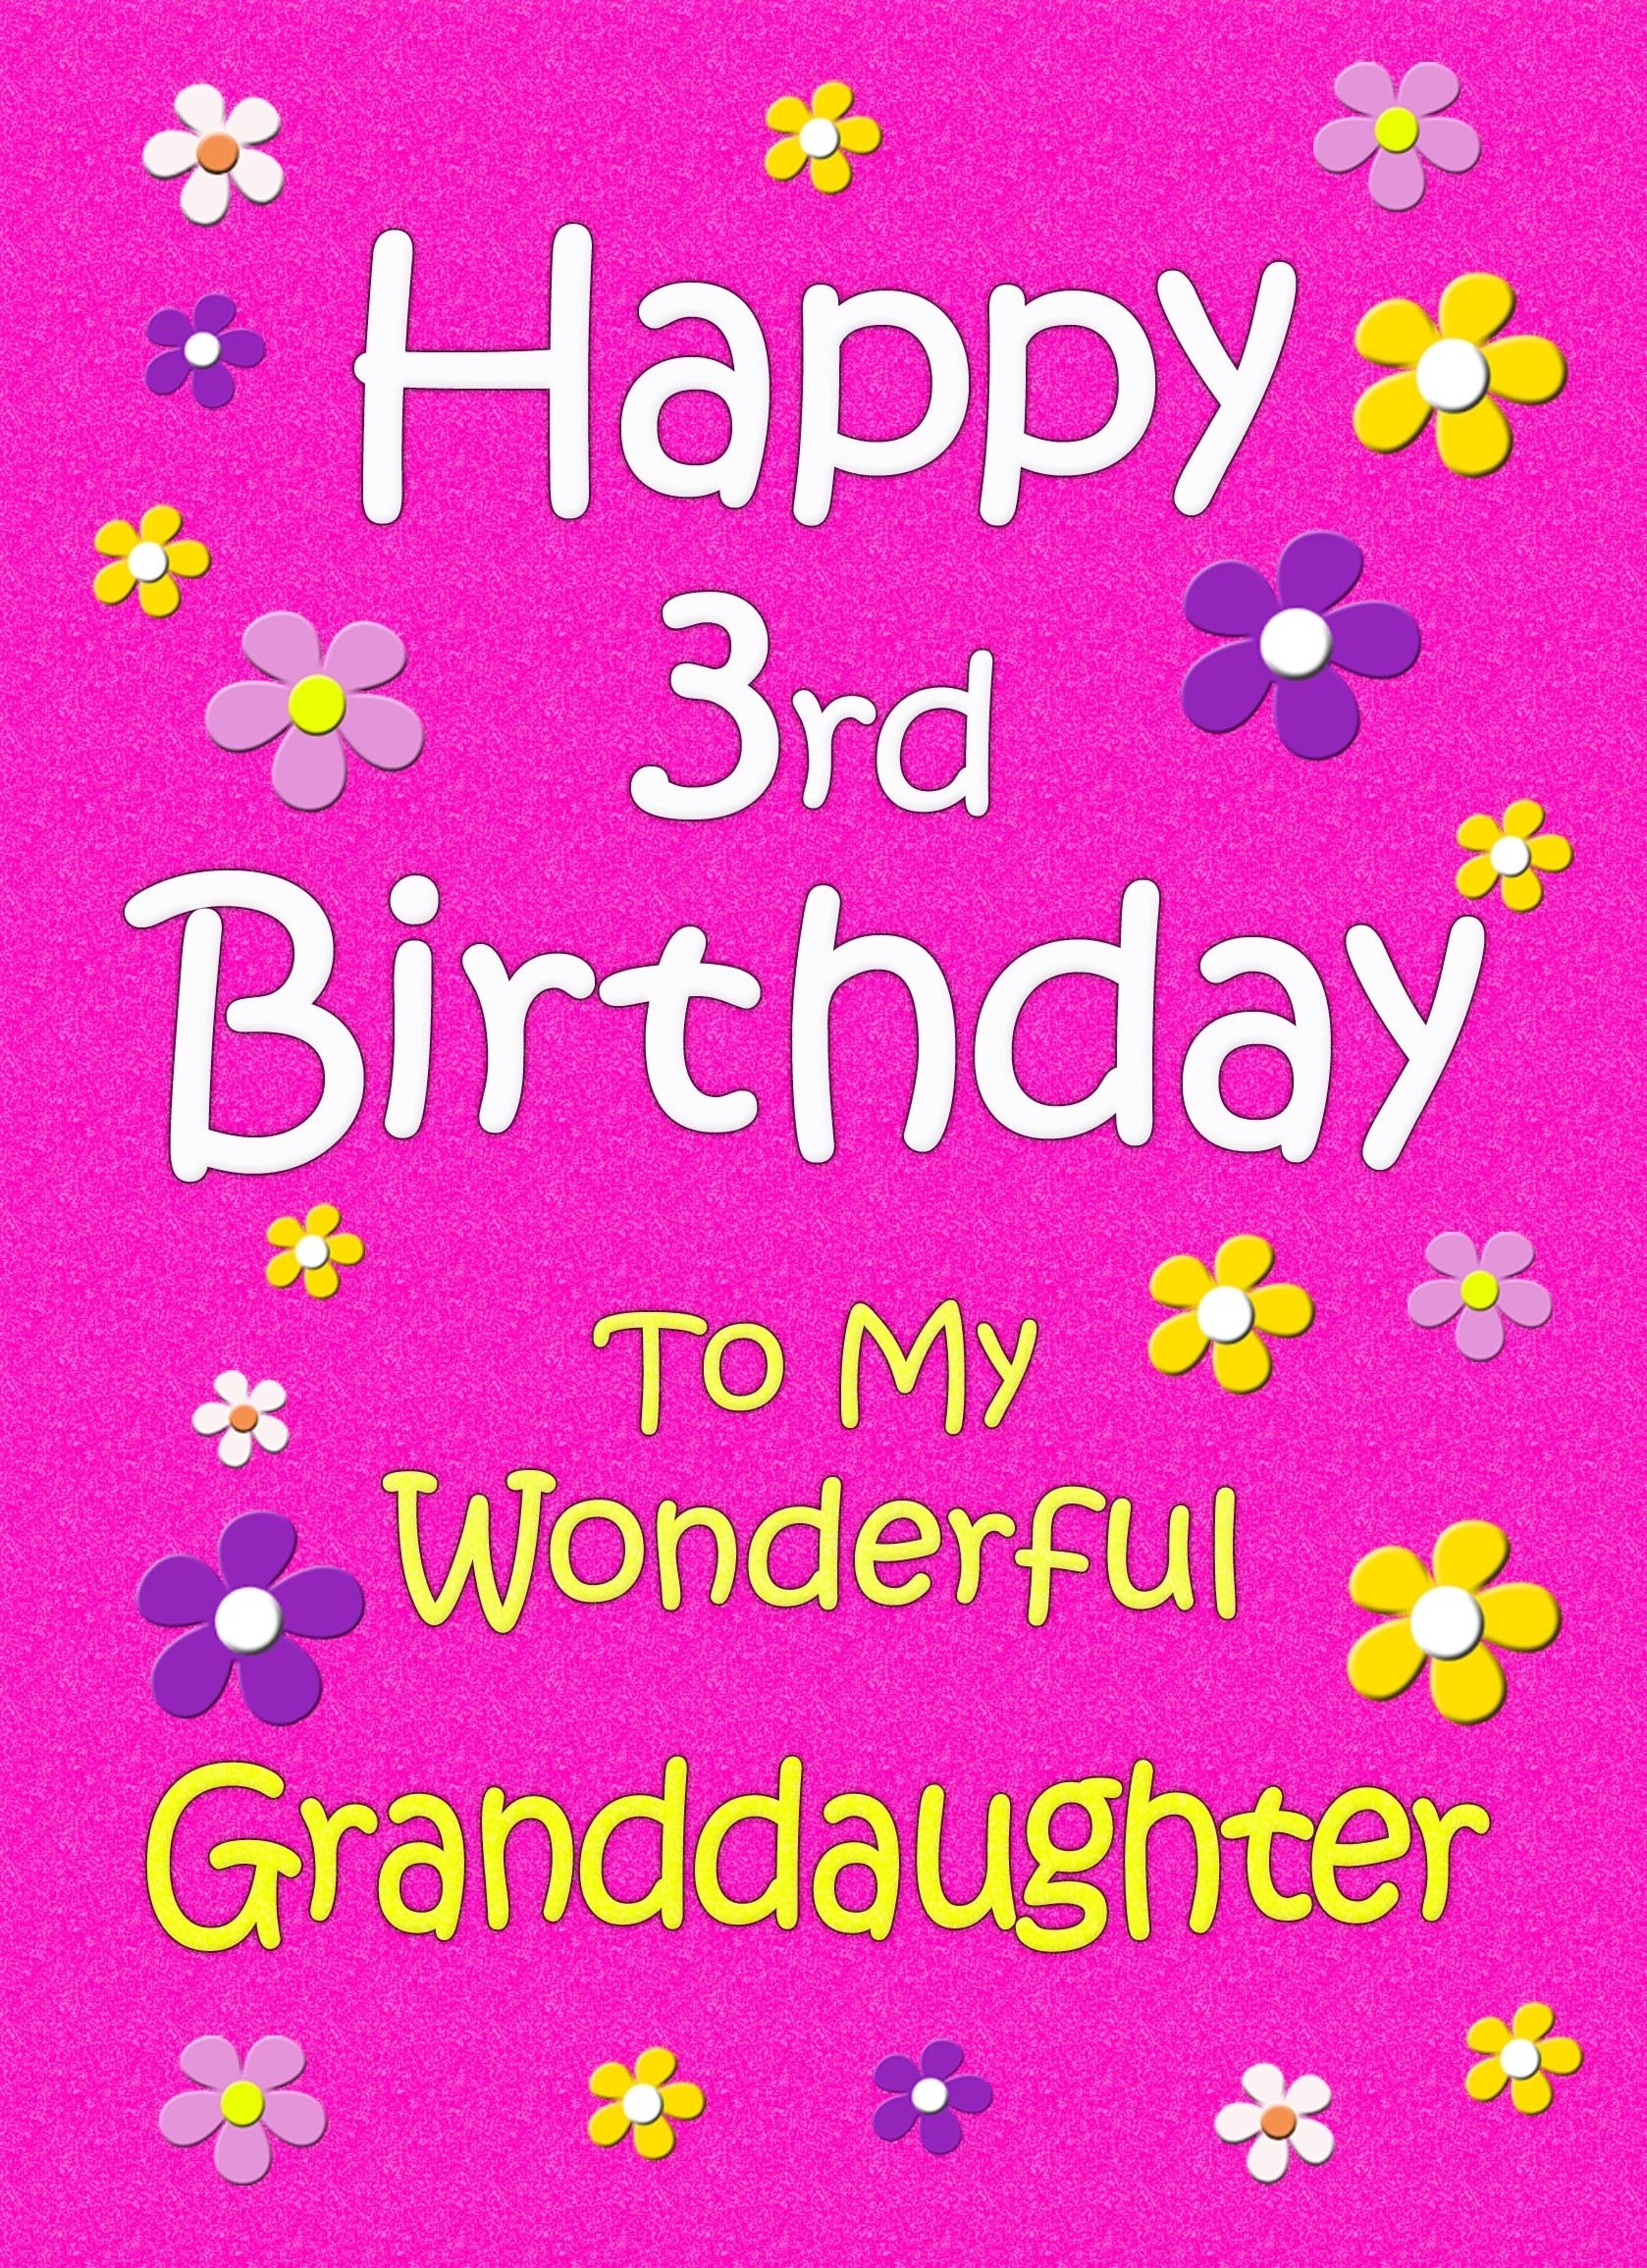 Granddaughter 3rd Birthday Card (Pink)